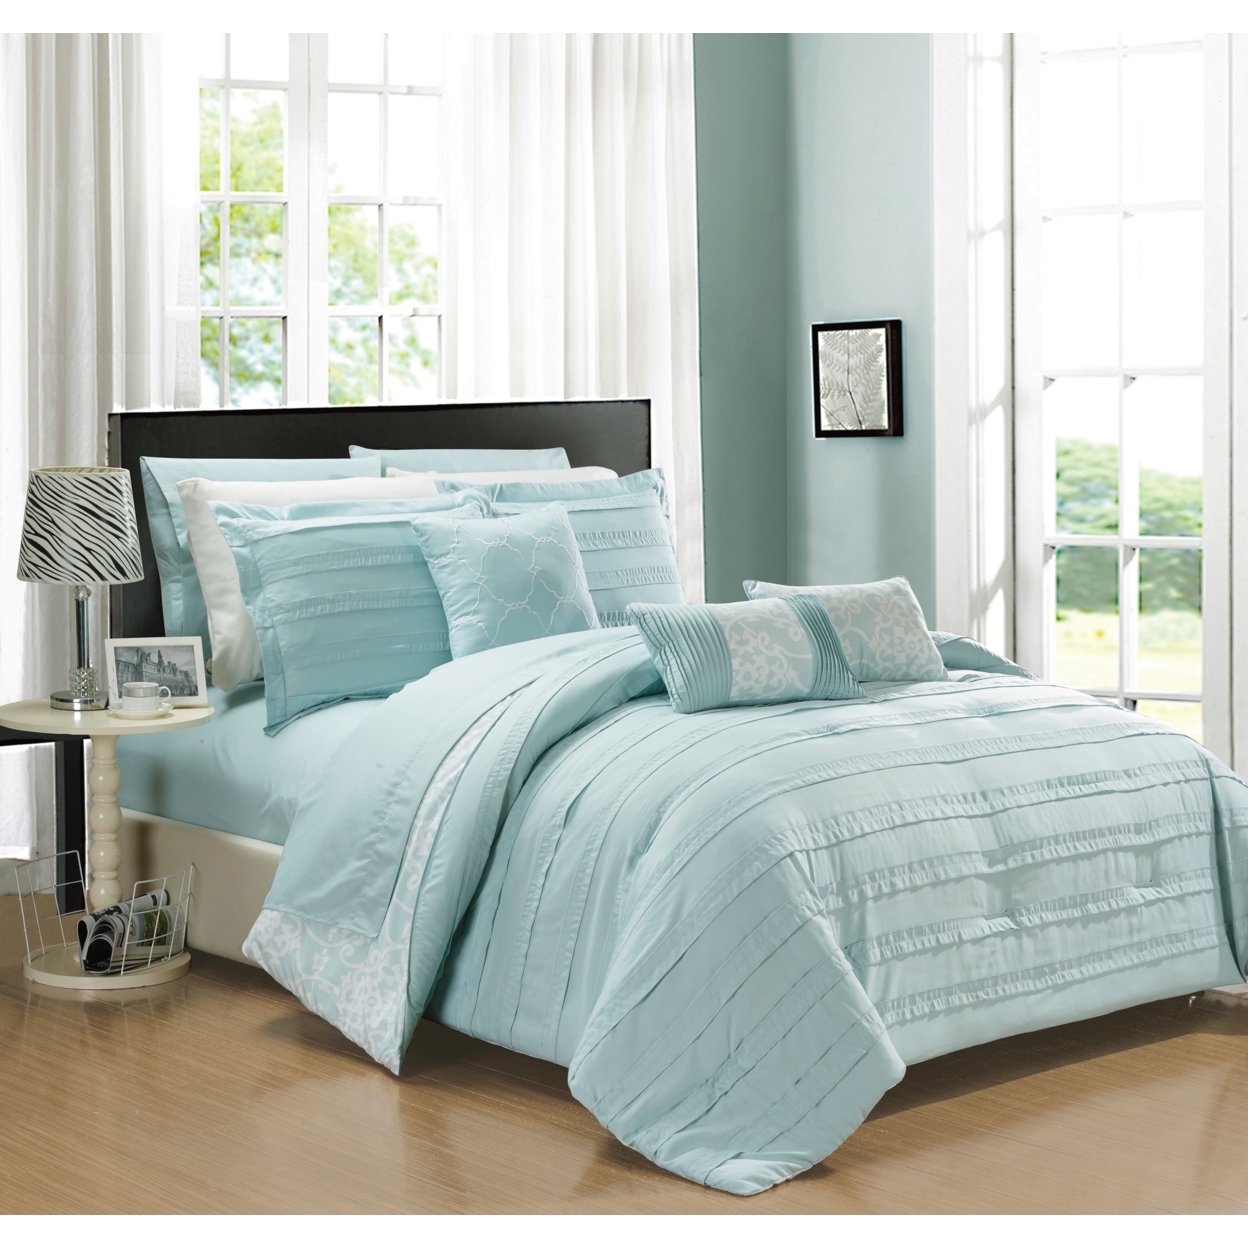 10-Piece Reversible Bed In A Bag Comforter & Sheet Set, Multiple Colors - Aqua, Queen